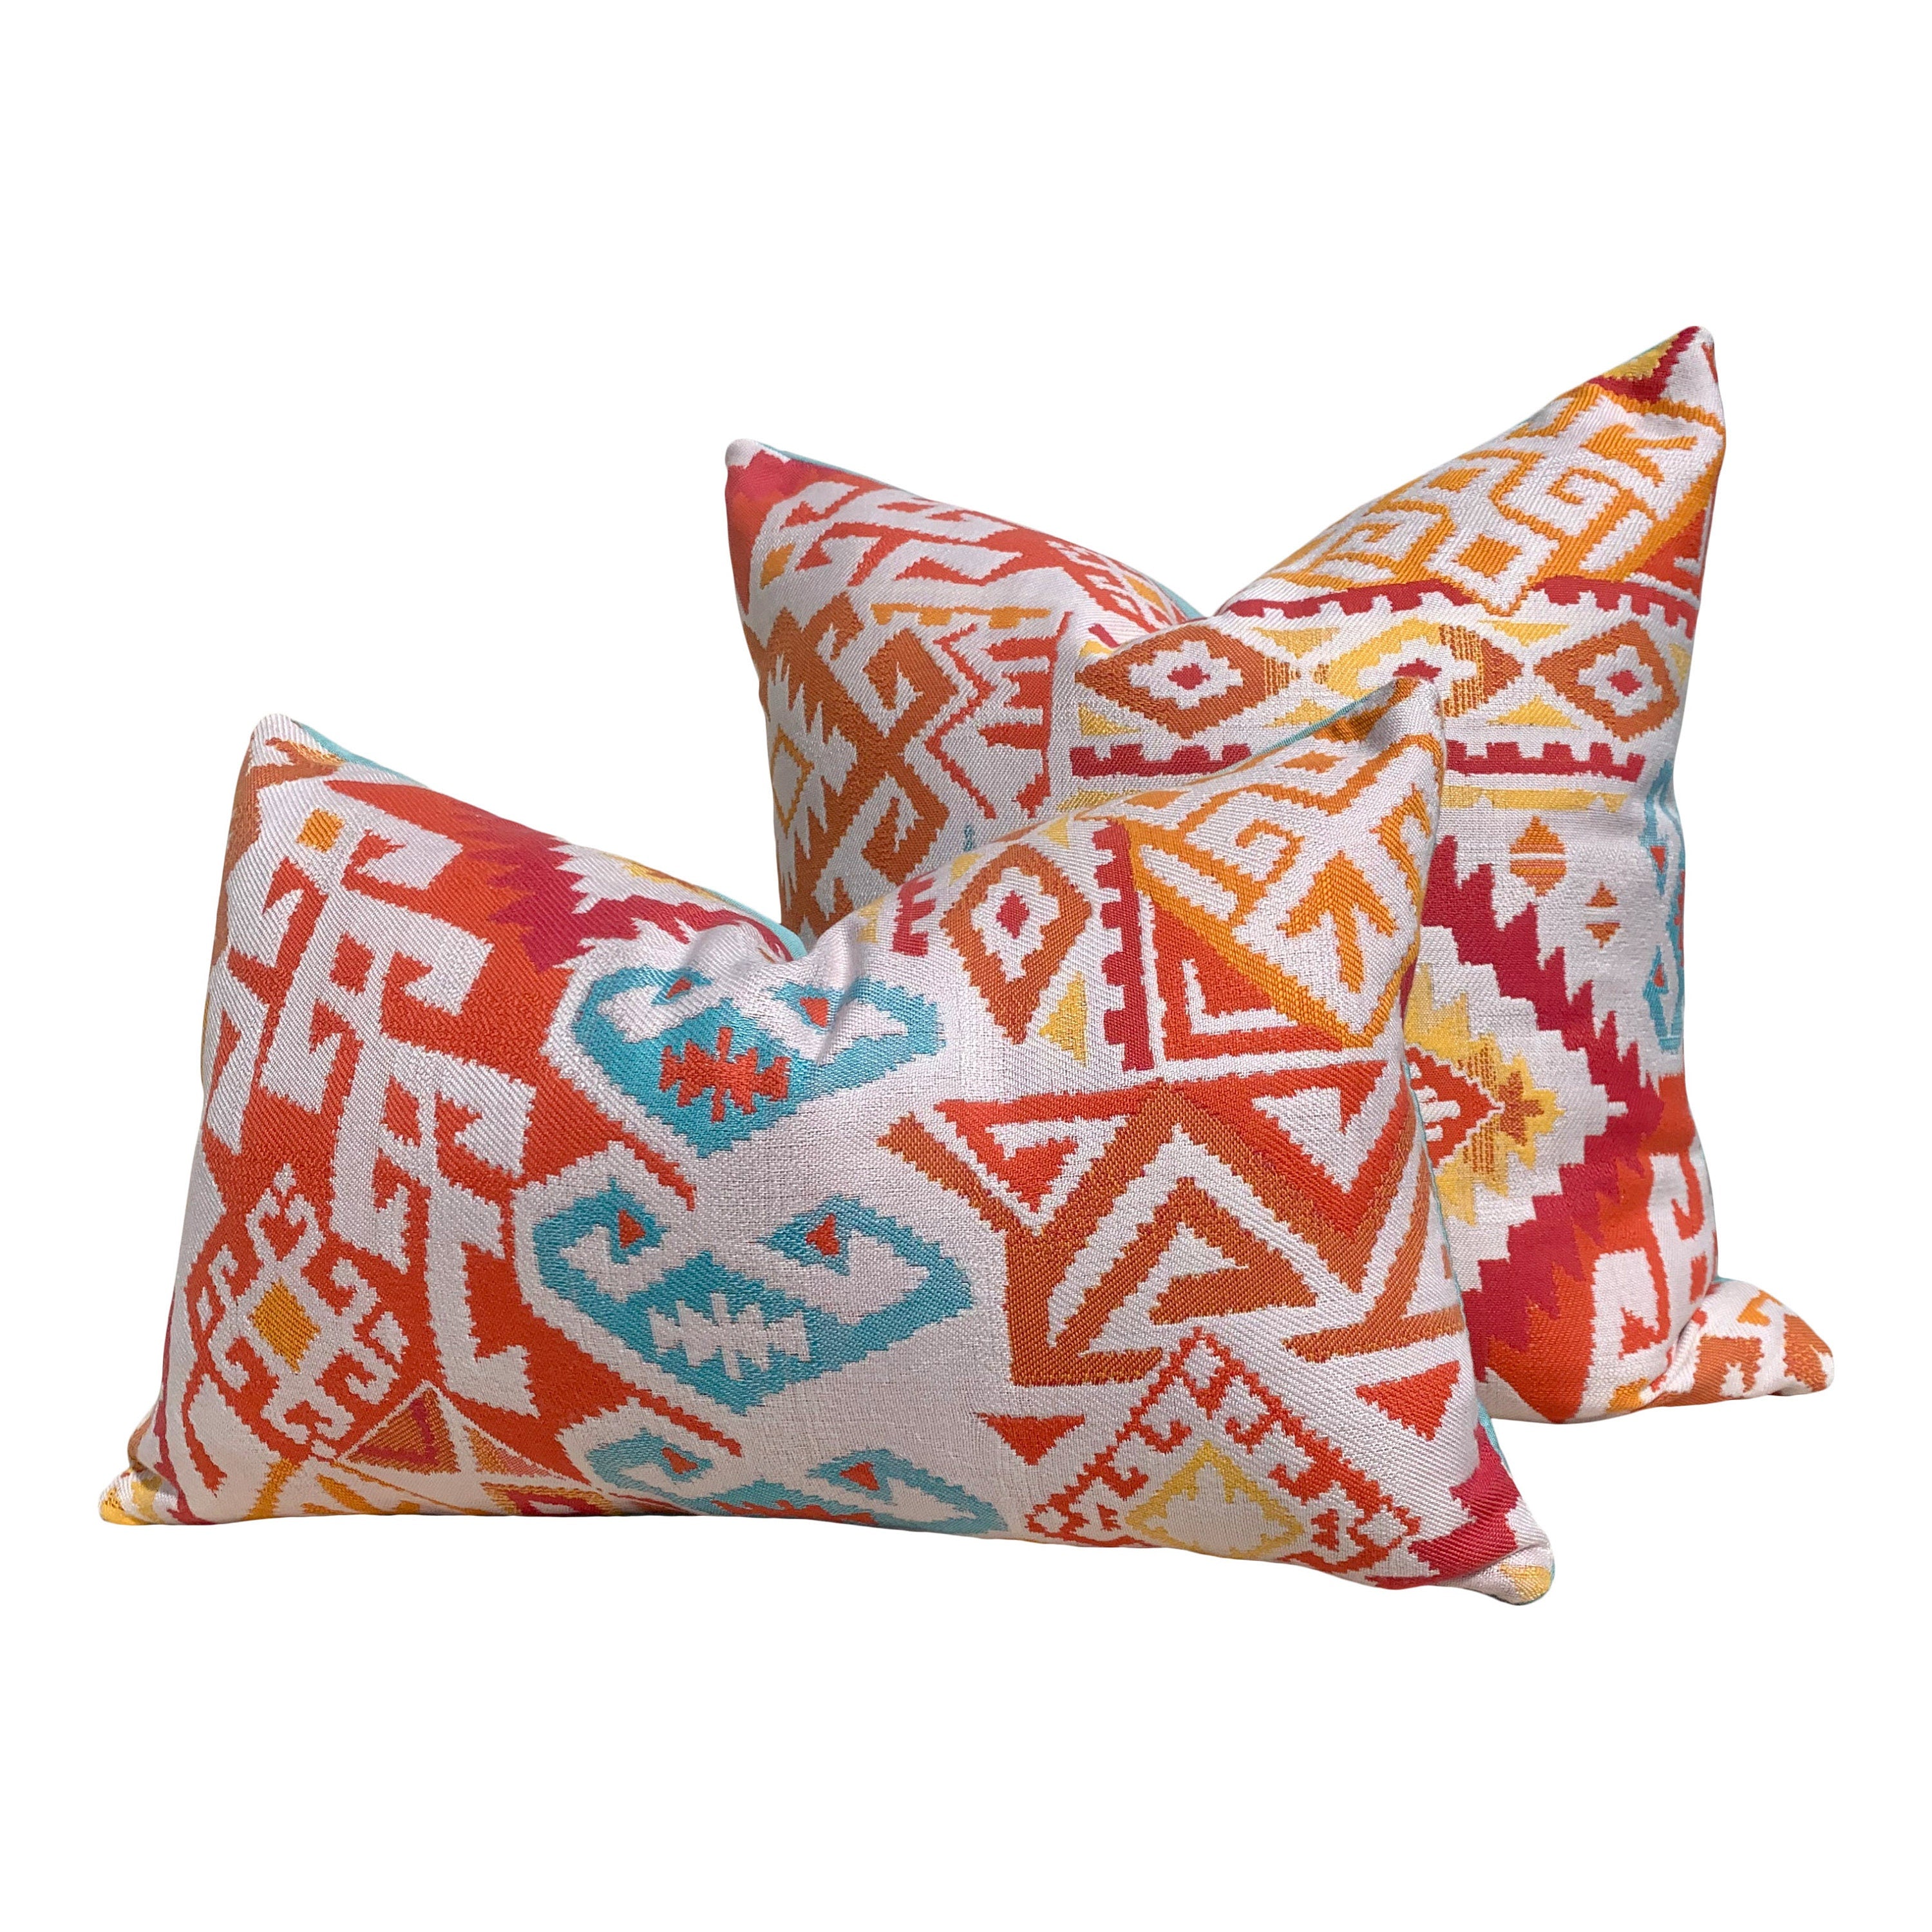 Sunbrella Woven Outdoor Indoor Pillow in Fiesta. Boho Outdoor Lumbar Pillow in Red and Orange, Lumbar Accent Outdoor Cushion Cover